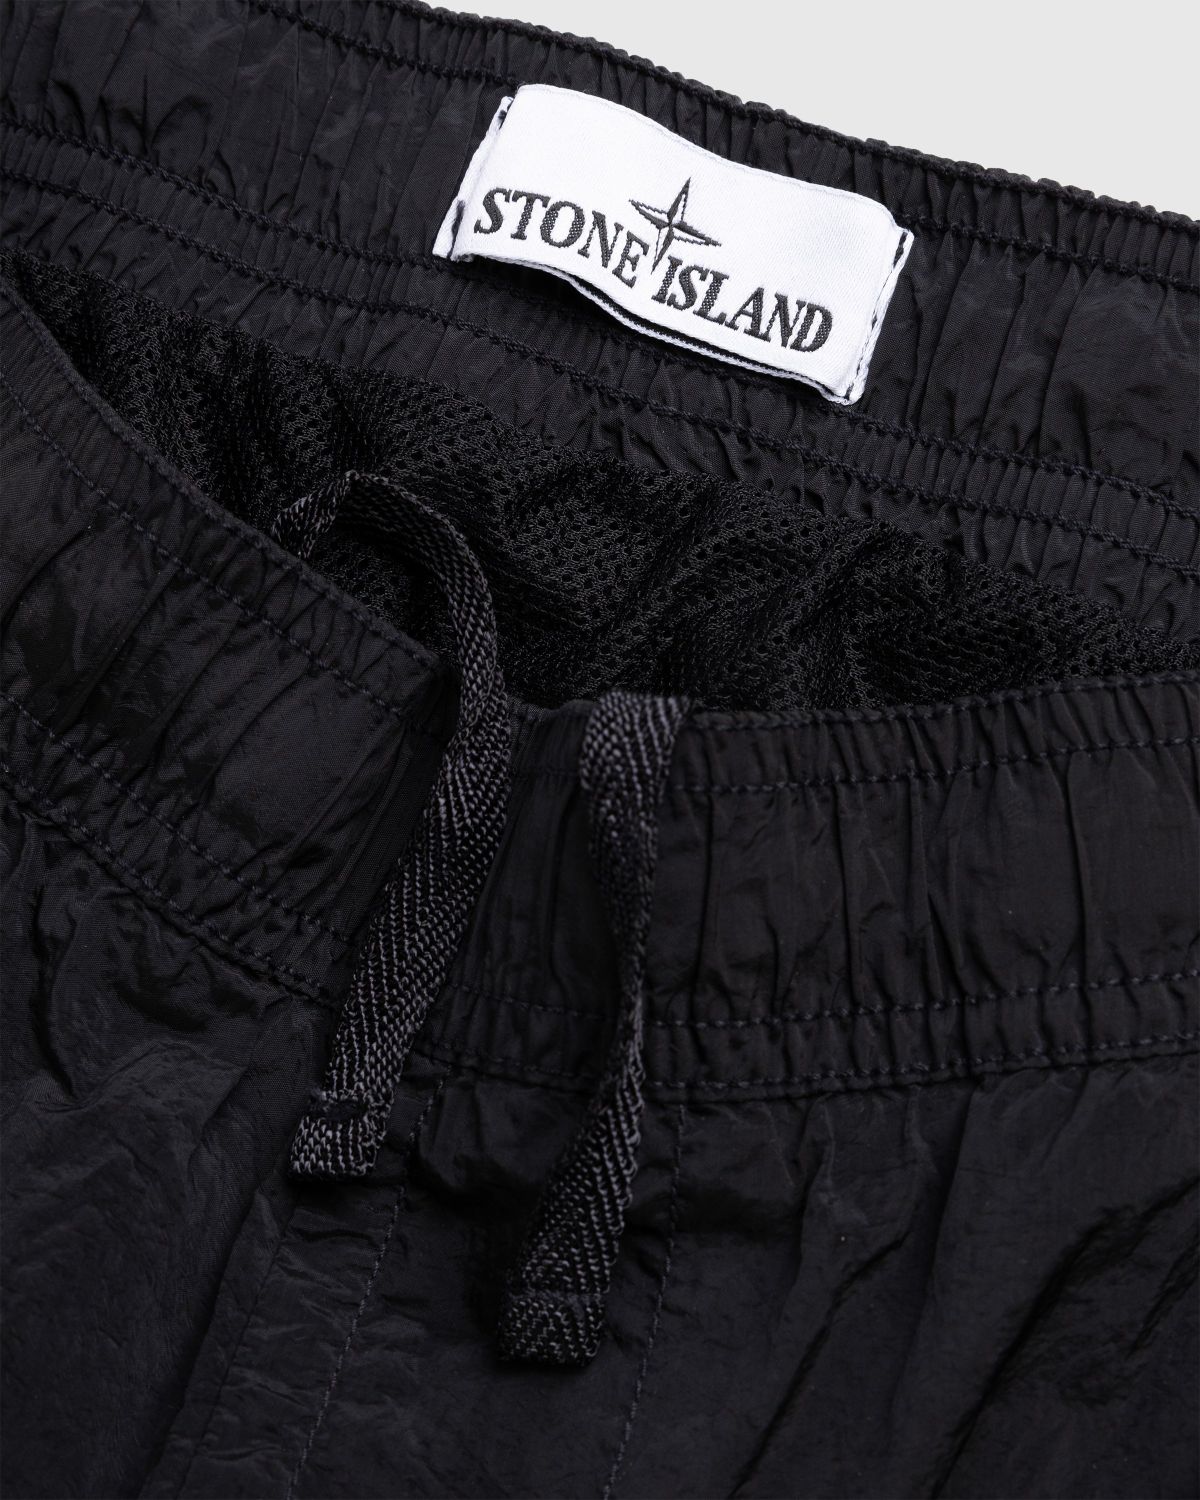 Stone Island – Nylon Metal Beach Shorts Black - Shorts - Black - Image 5